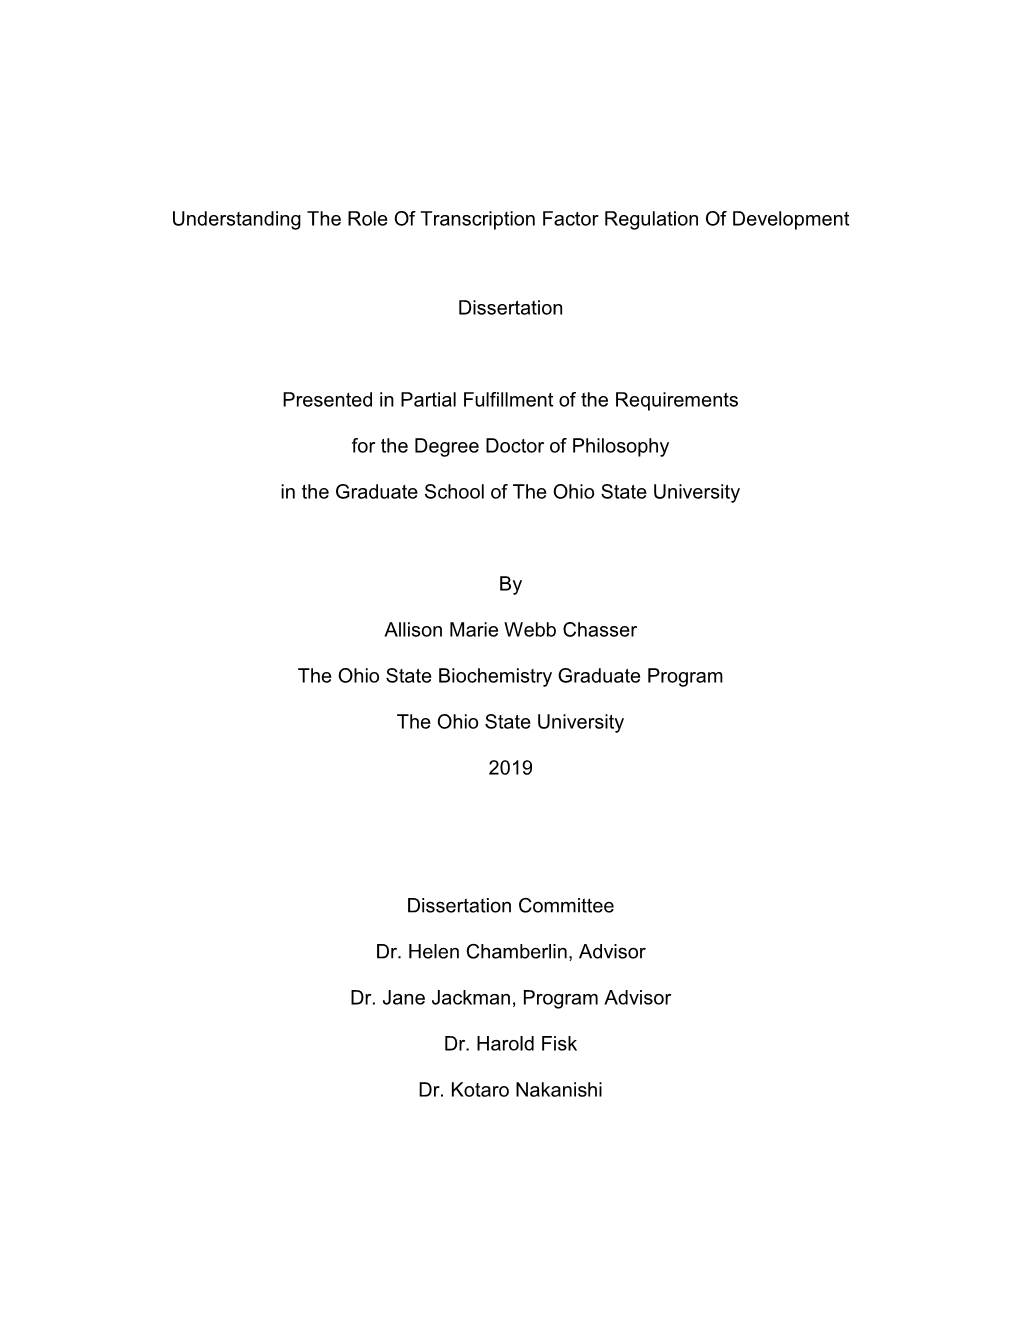 Understanding the Role of Transcription Factor Regulation of Development